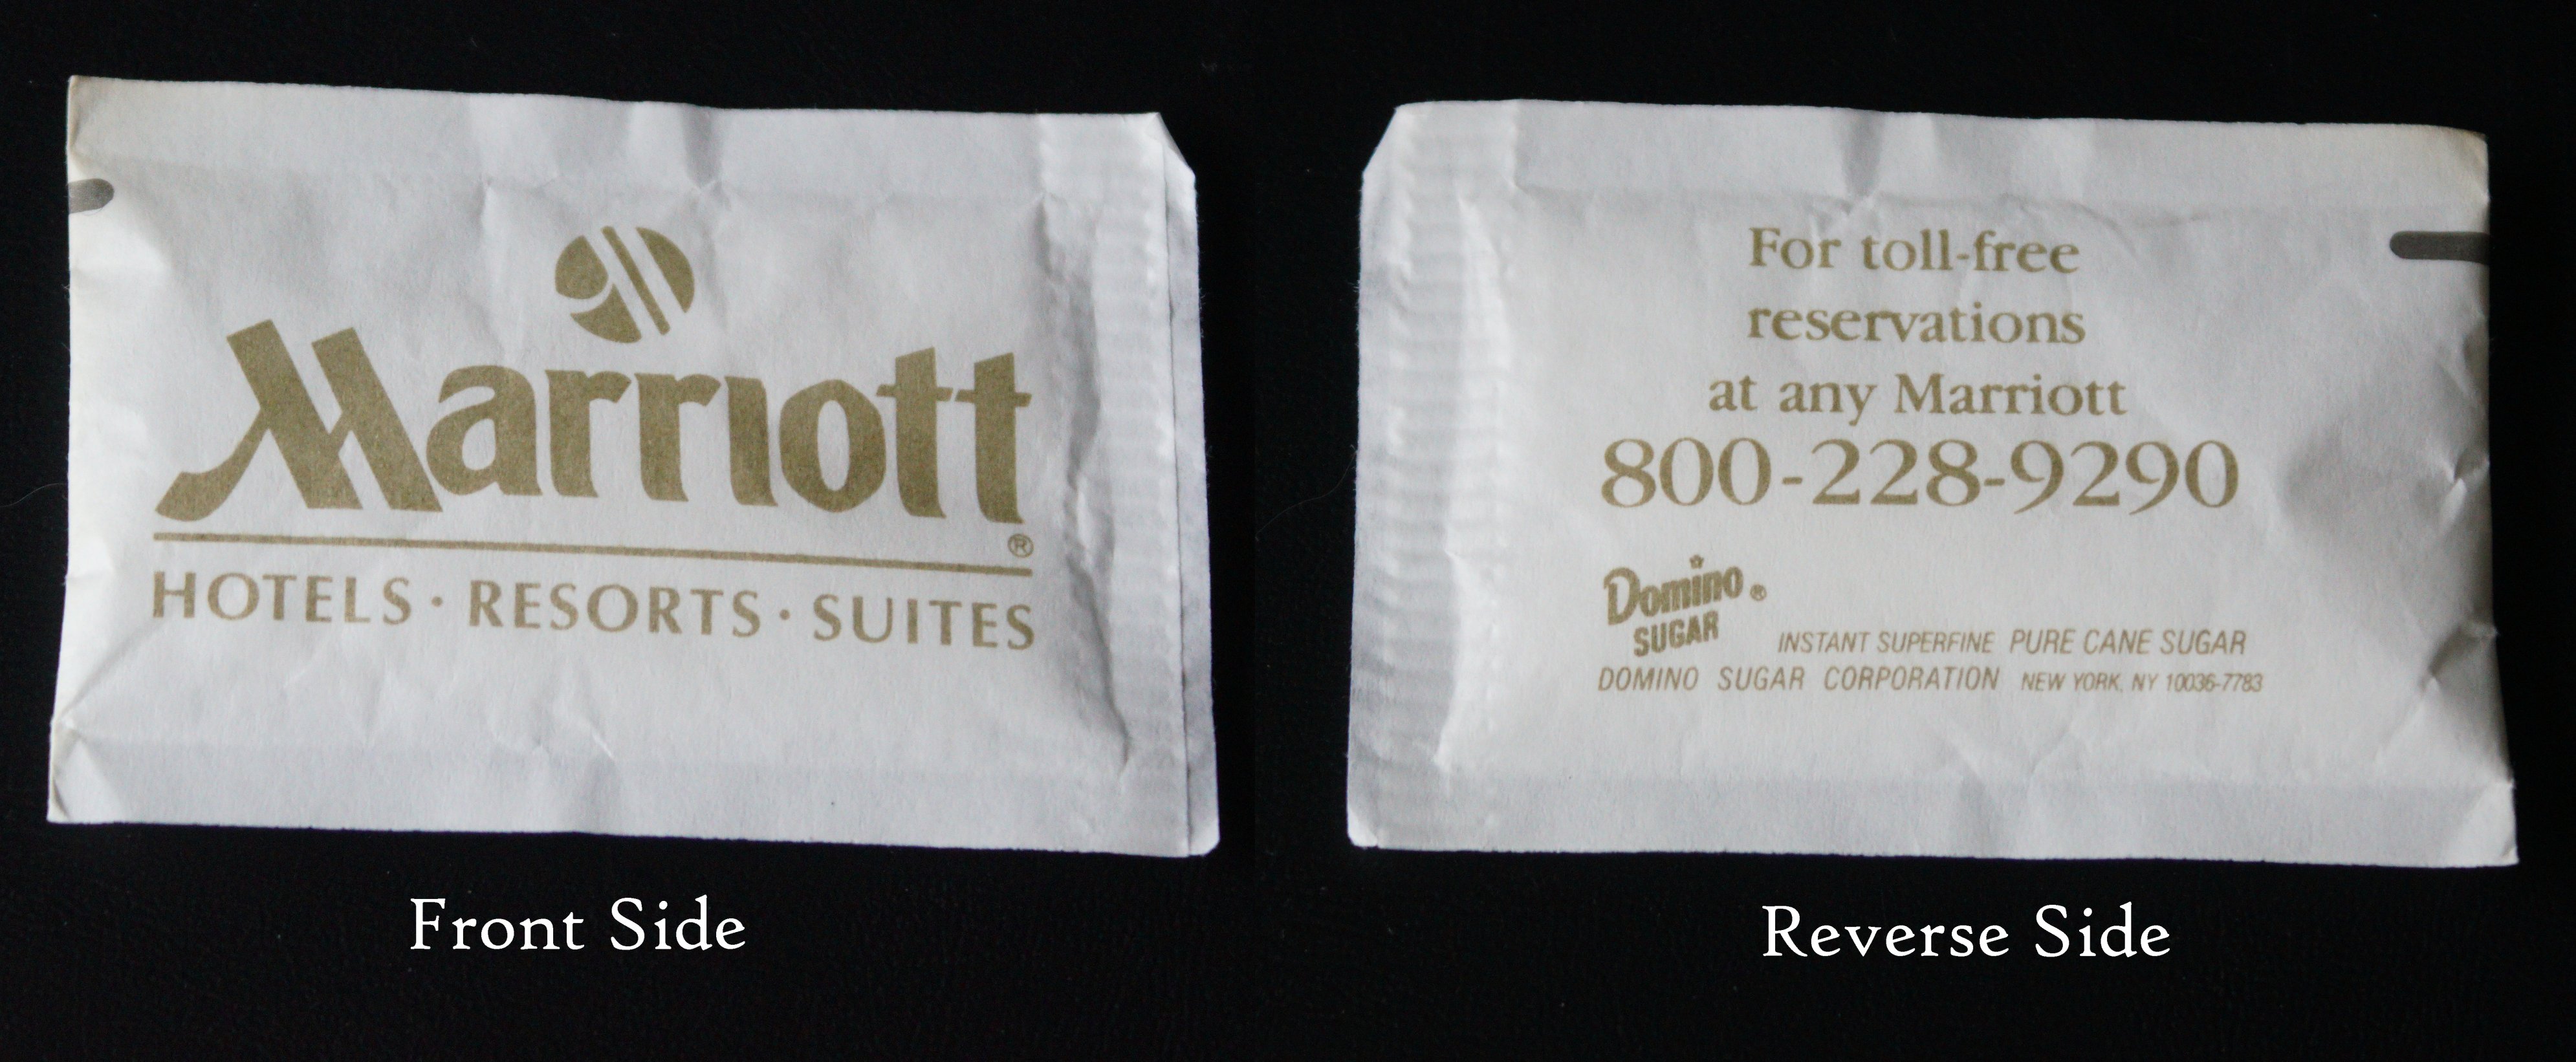 Marriott Hotels Box 1-0052.jpg  by whitetaylor